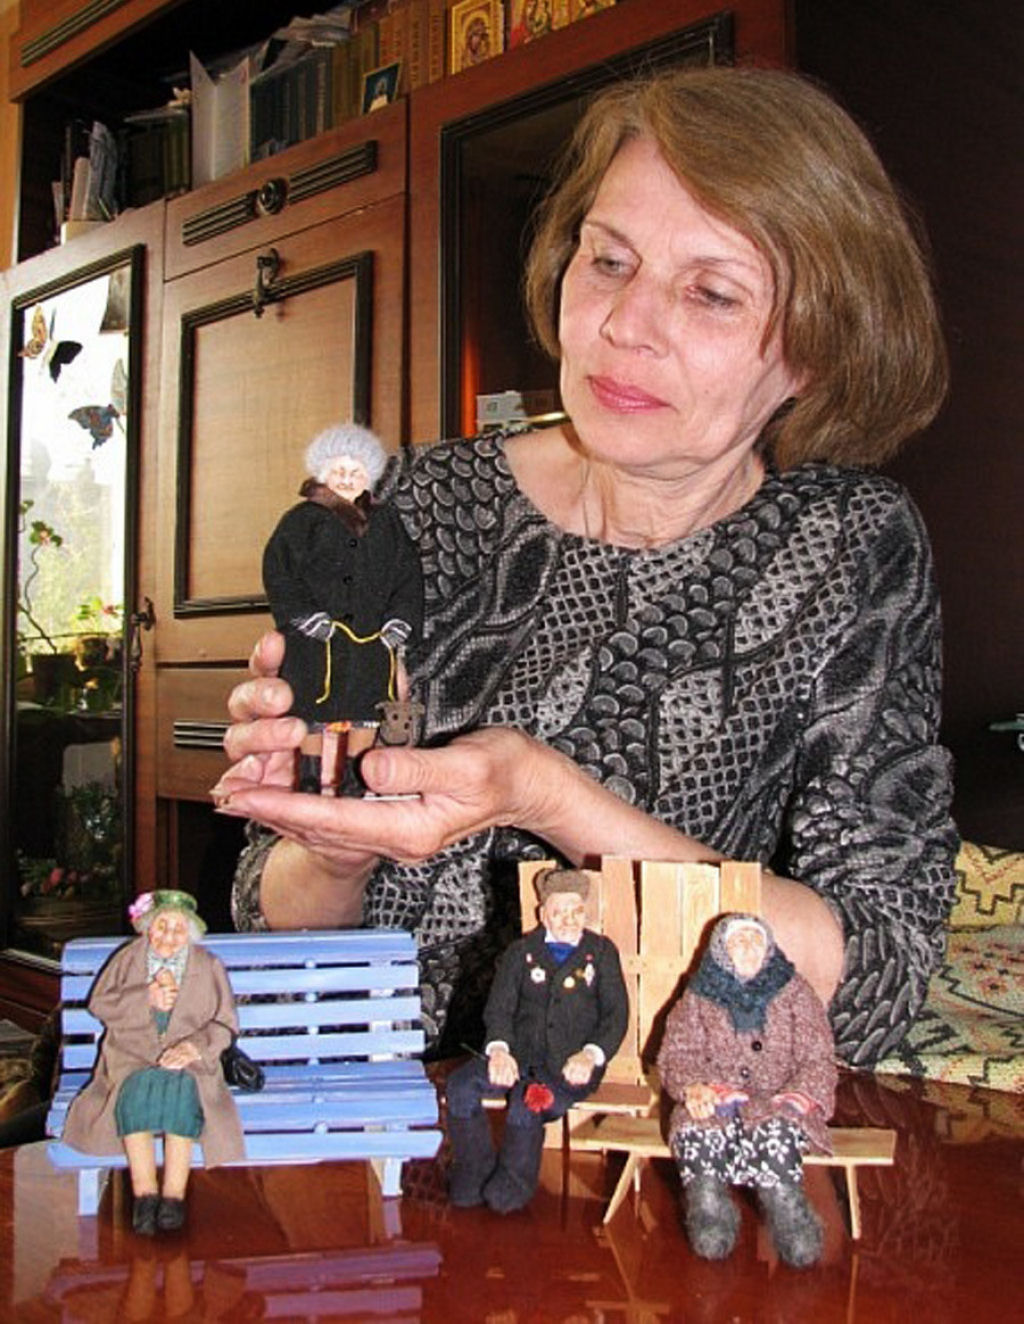 Estes brinquedos fofos e surpreendentes retratam a vida dos idosos na Rssia 19